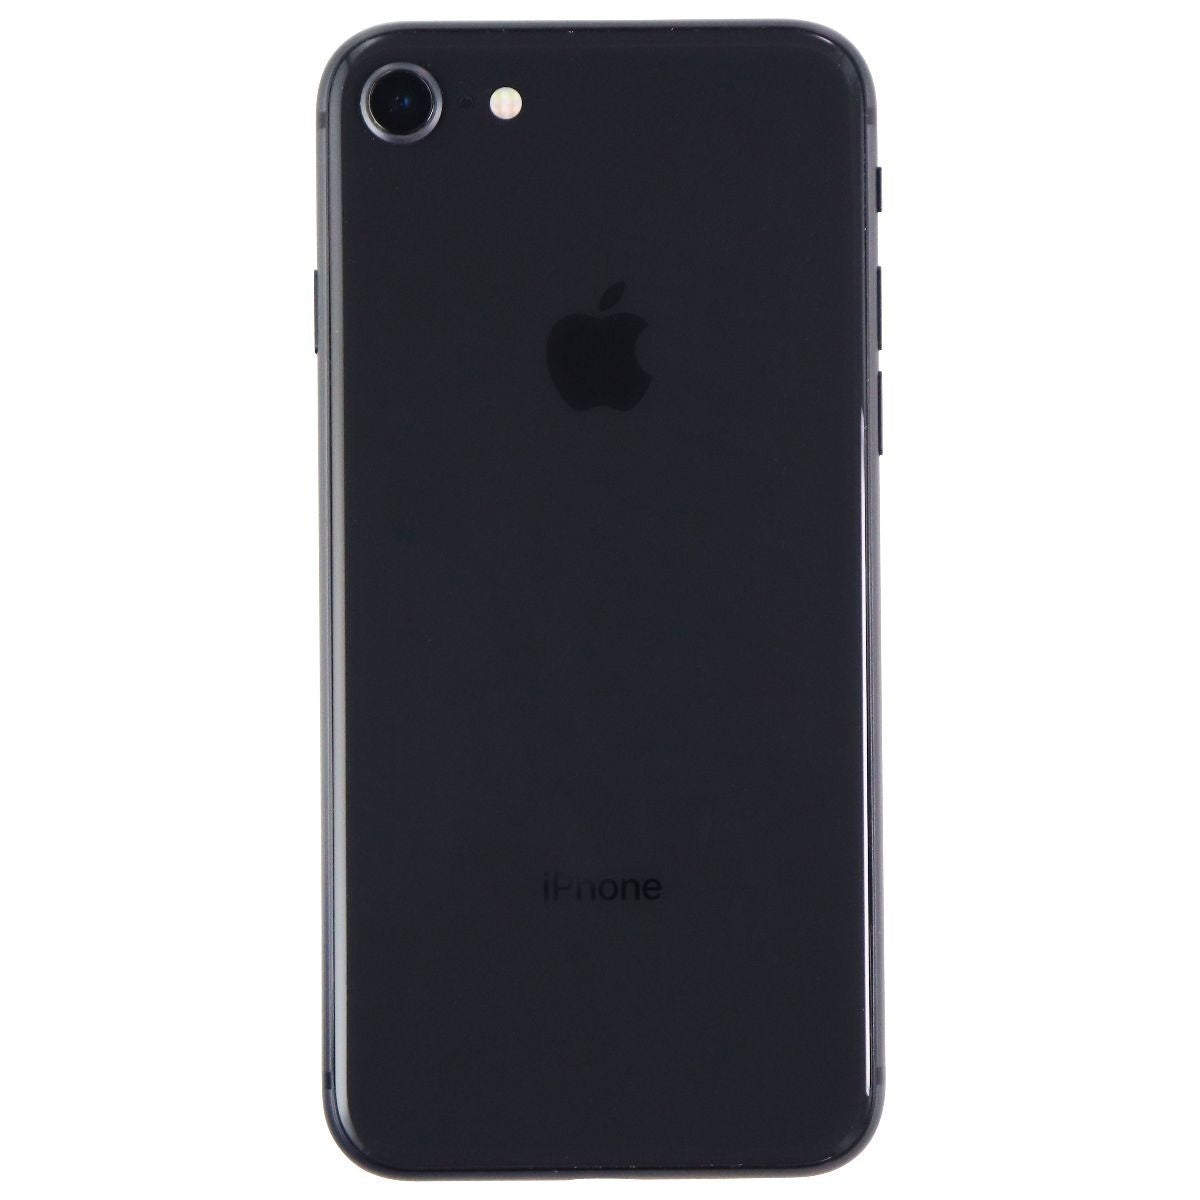 Apple iPhone 8 (4.7-inch) Smartphone (A1863) Unlocked - 64GB / Space Gray Cell Phones & Smartphones Apple    - Simple Cell Bulk Wholesale Pricing - USA Seller